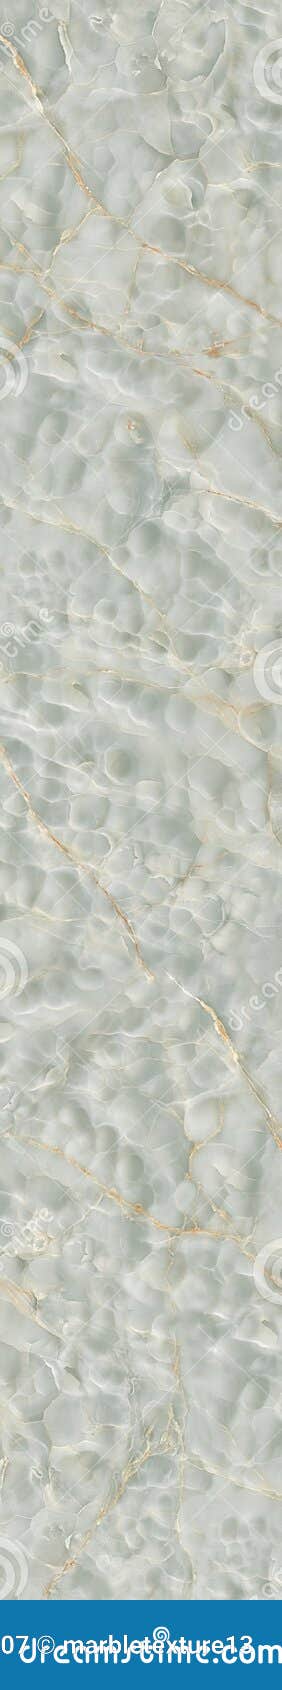 onyx, italain marble, marble background, texture of natural stone,white onyx marble stone background, shell or nacre texture,polis